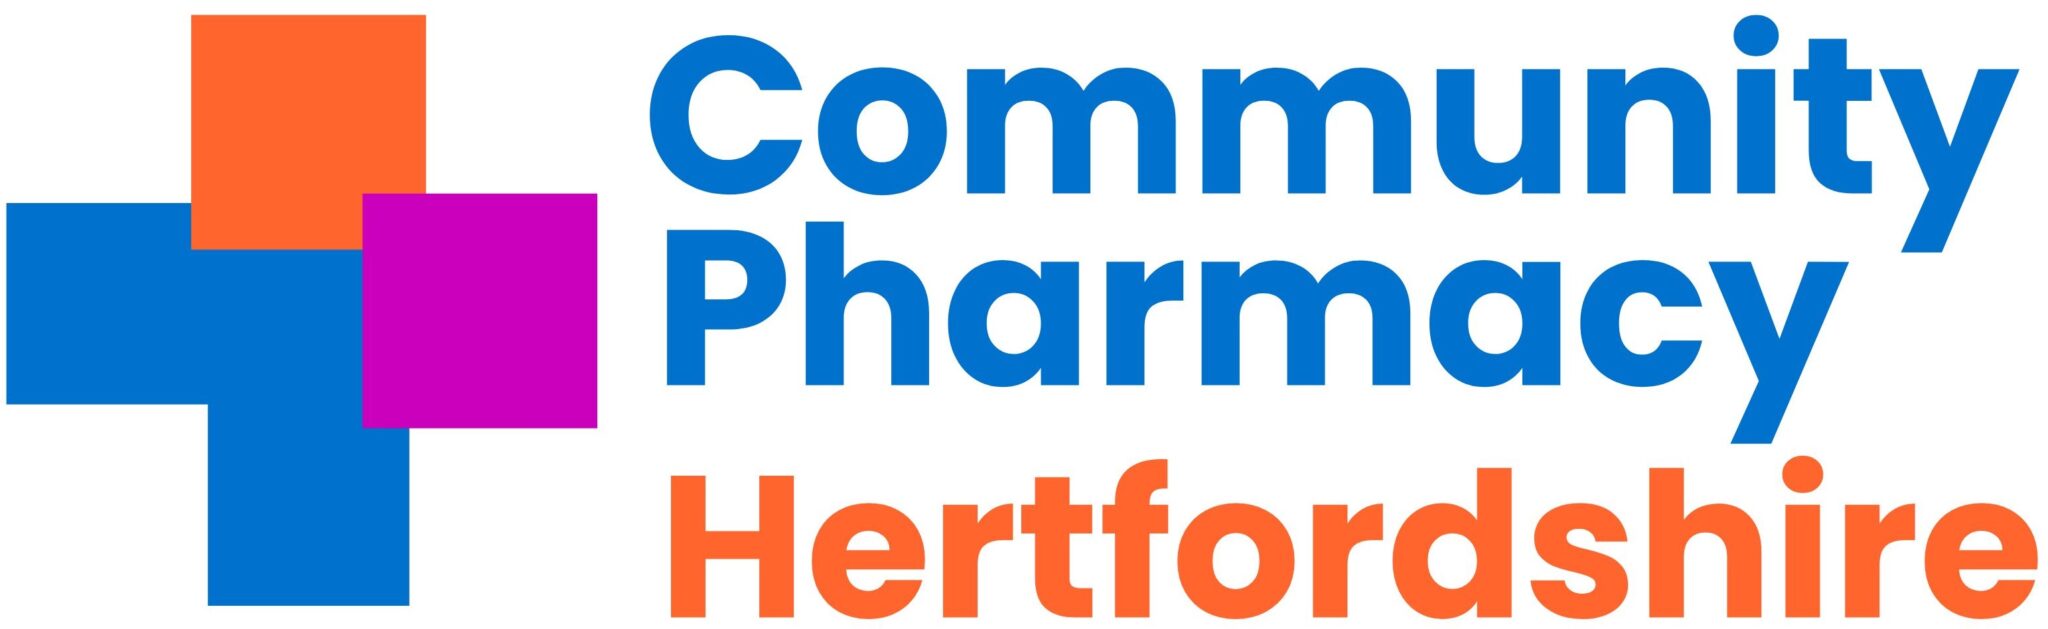 Community Pharmacy England